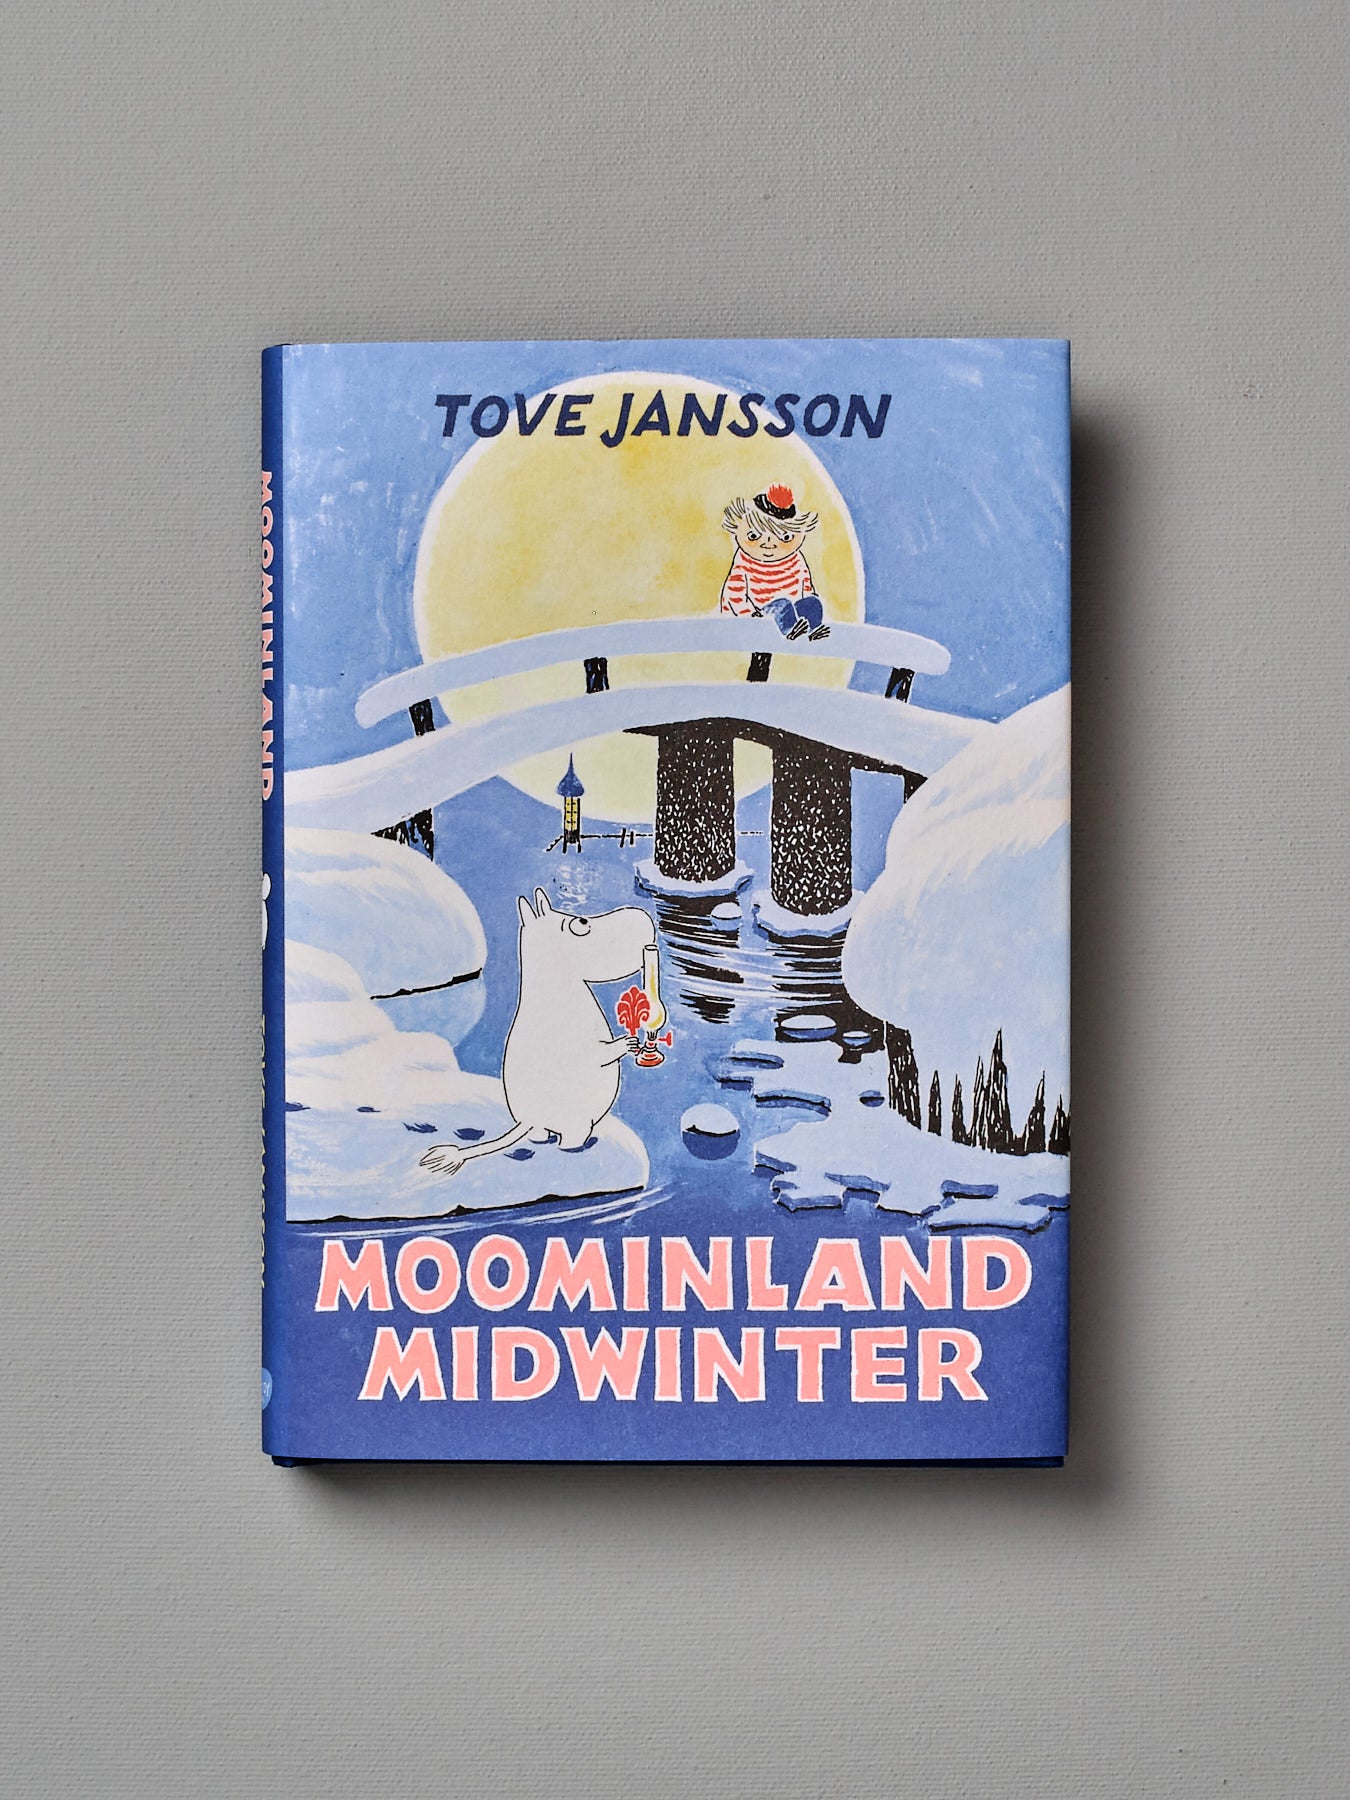 Tove Jansson's Moominland Midwinter.